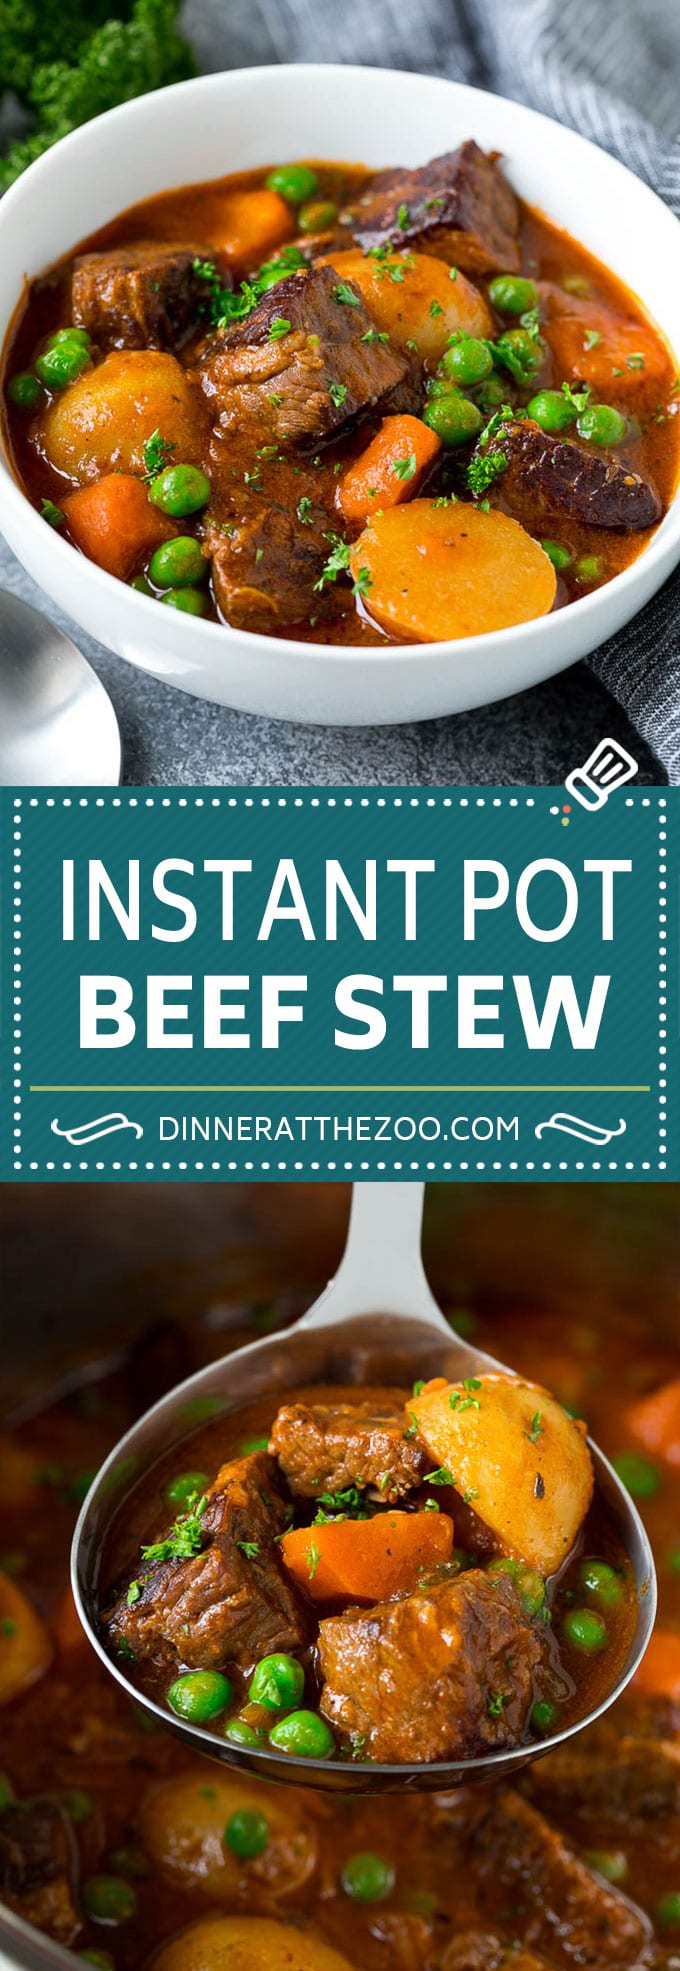 Instant Pot Beef Stew Recipe | Pressure Cooker Beef Stew | Beef Stew #beef #stew #soup #pressurecooker #instantpot #dinner #dinneratthezoo